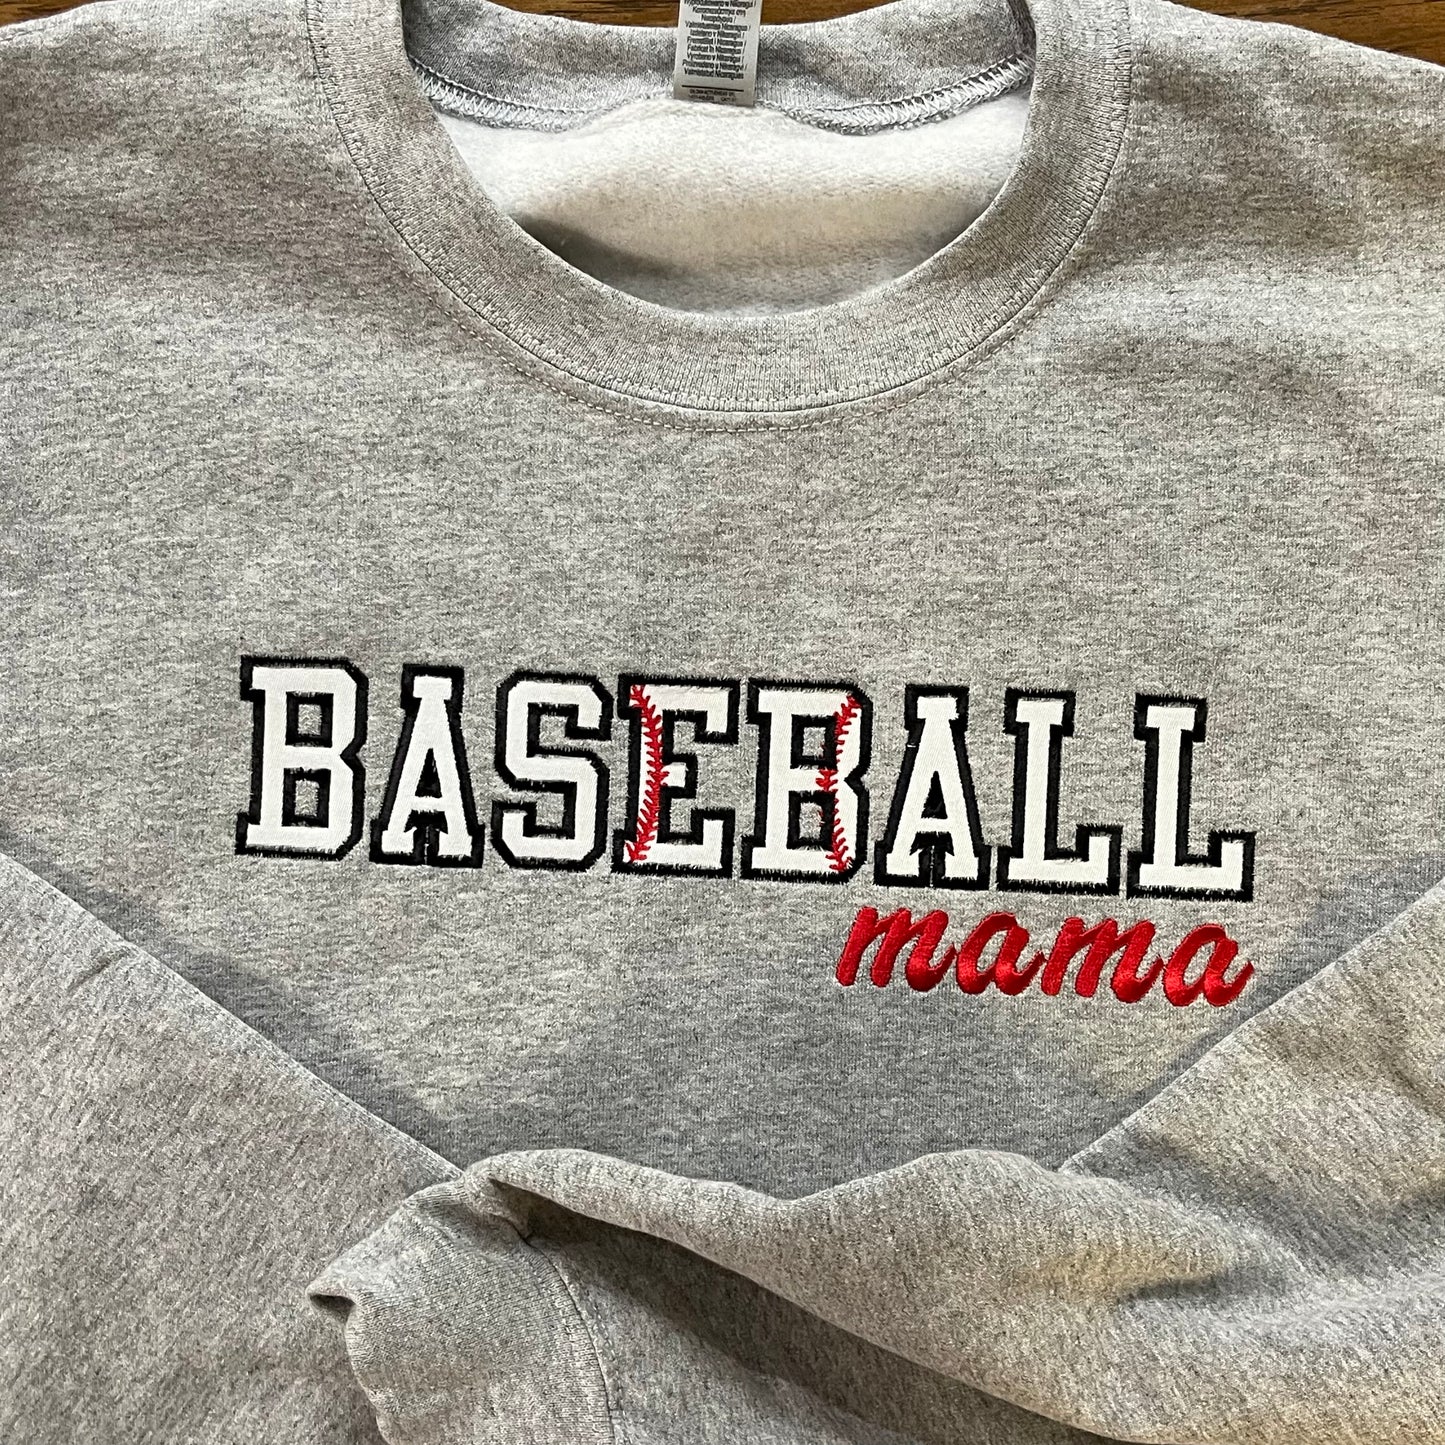 Baseball Mama Sweatshirt